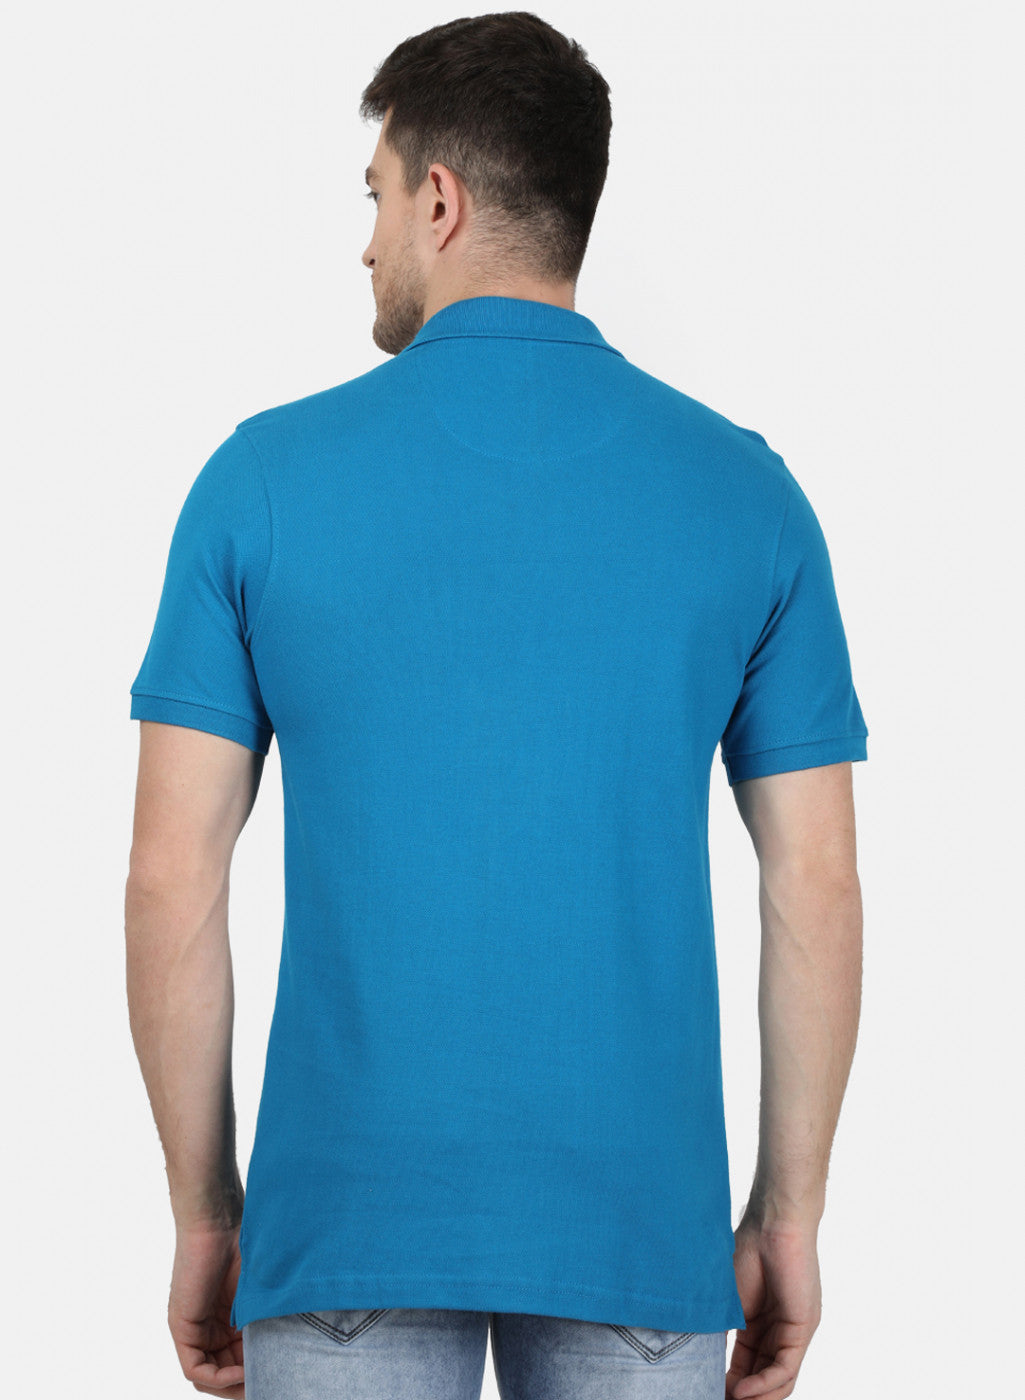 Mens Blue Plain T-Shirt